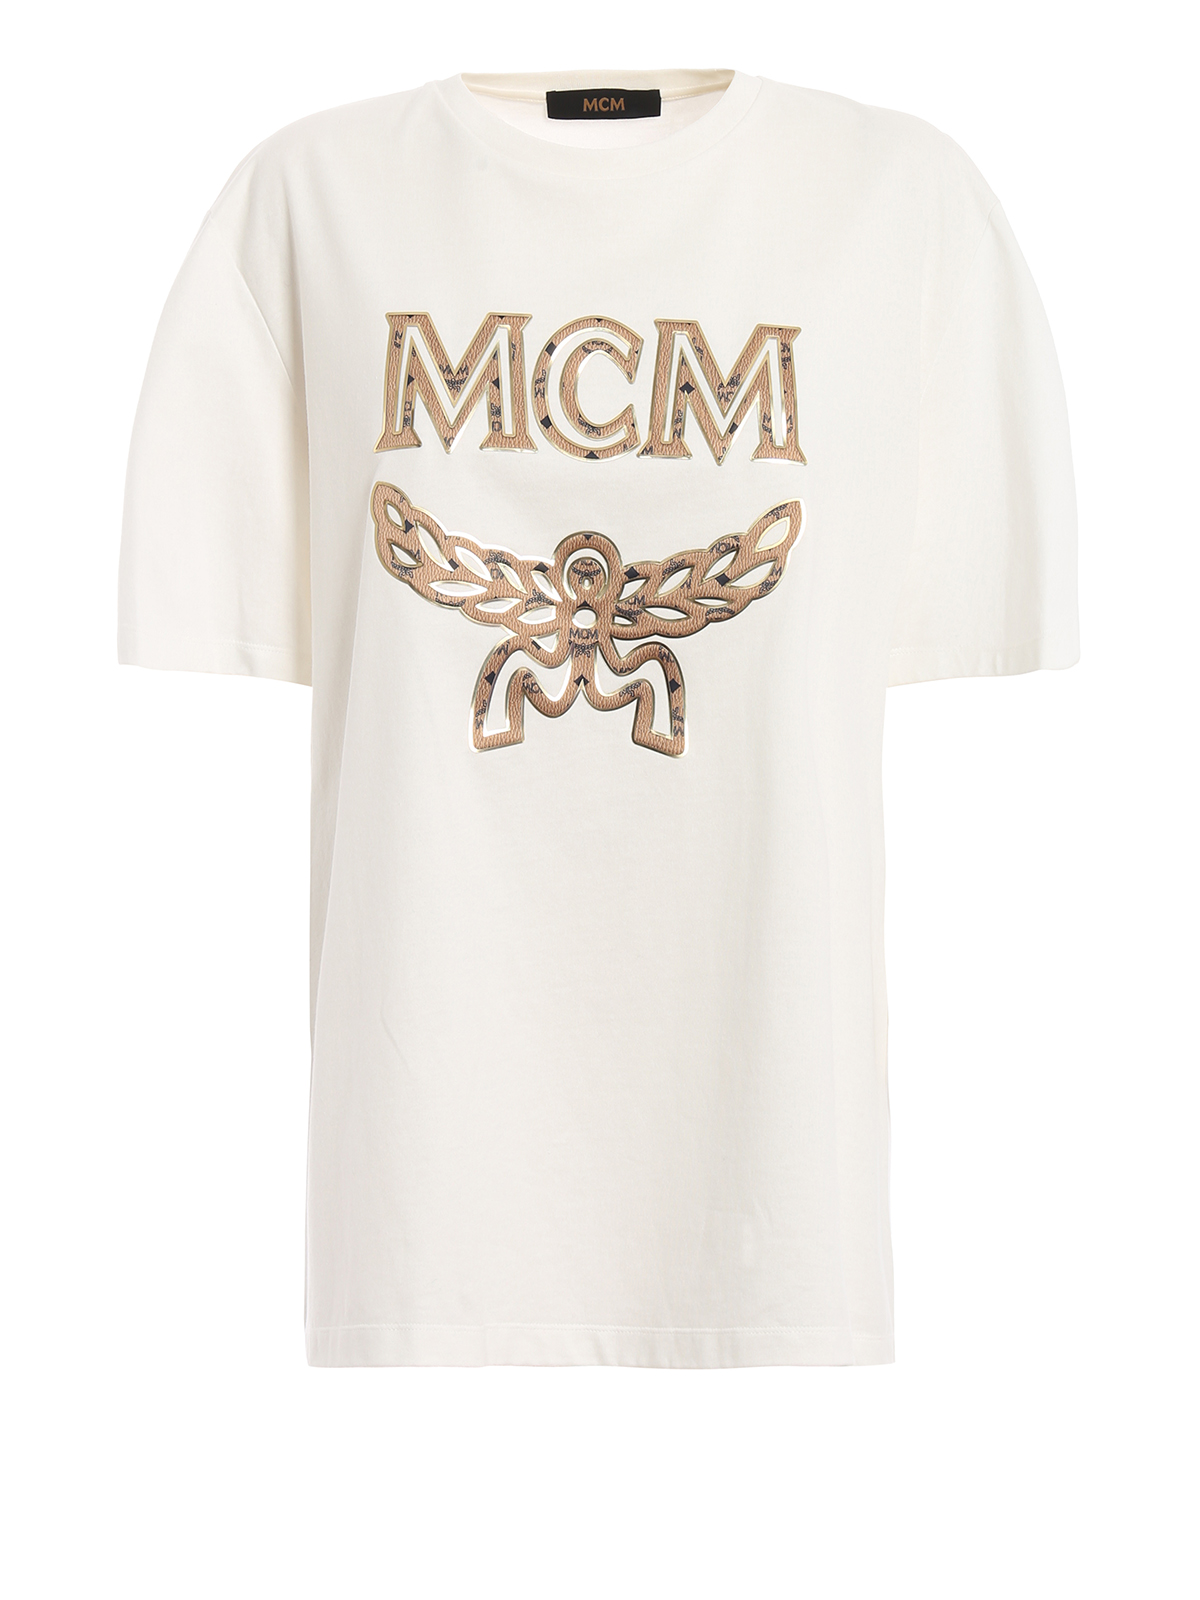 T-shirts Mcm - MCM print white T-shirt - MHT8SMM10WI001 | iKRIX.com